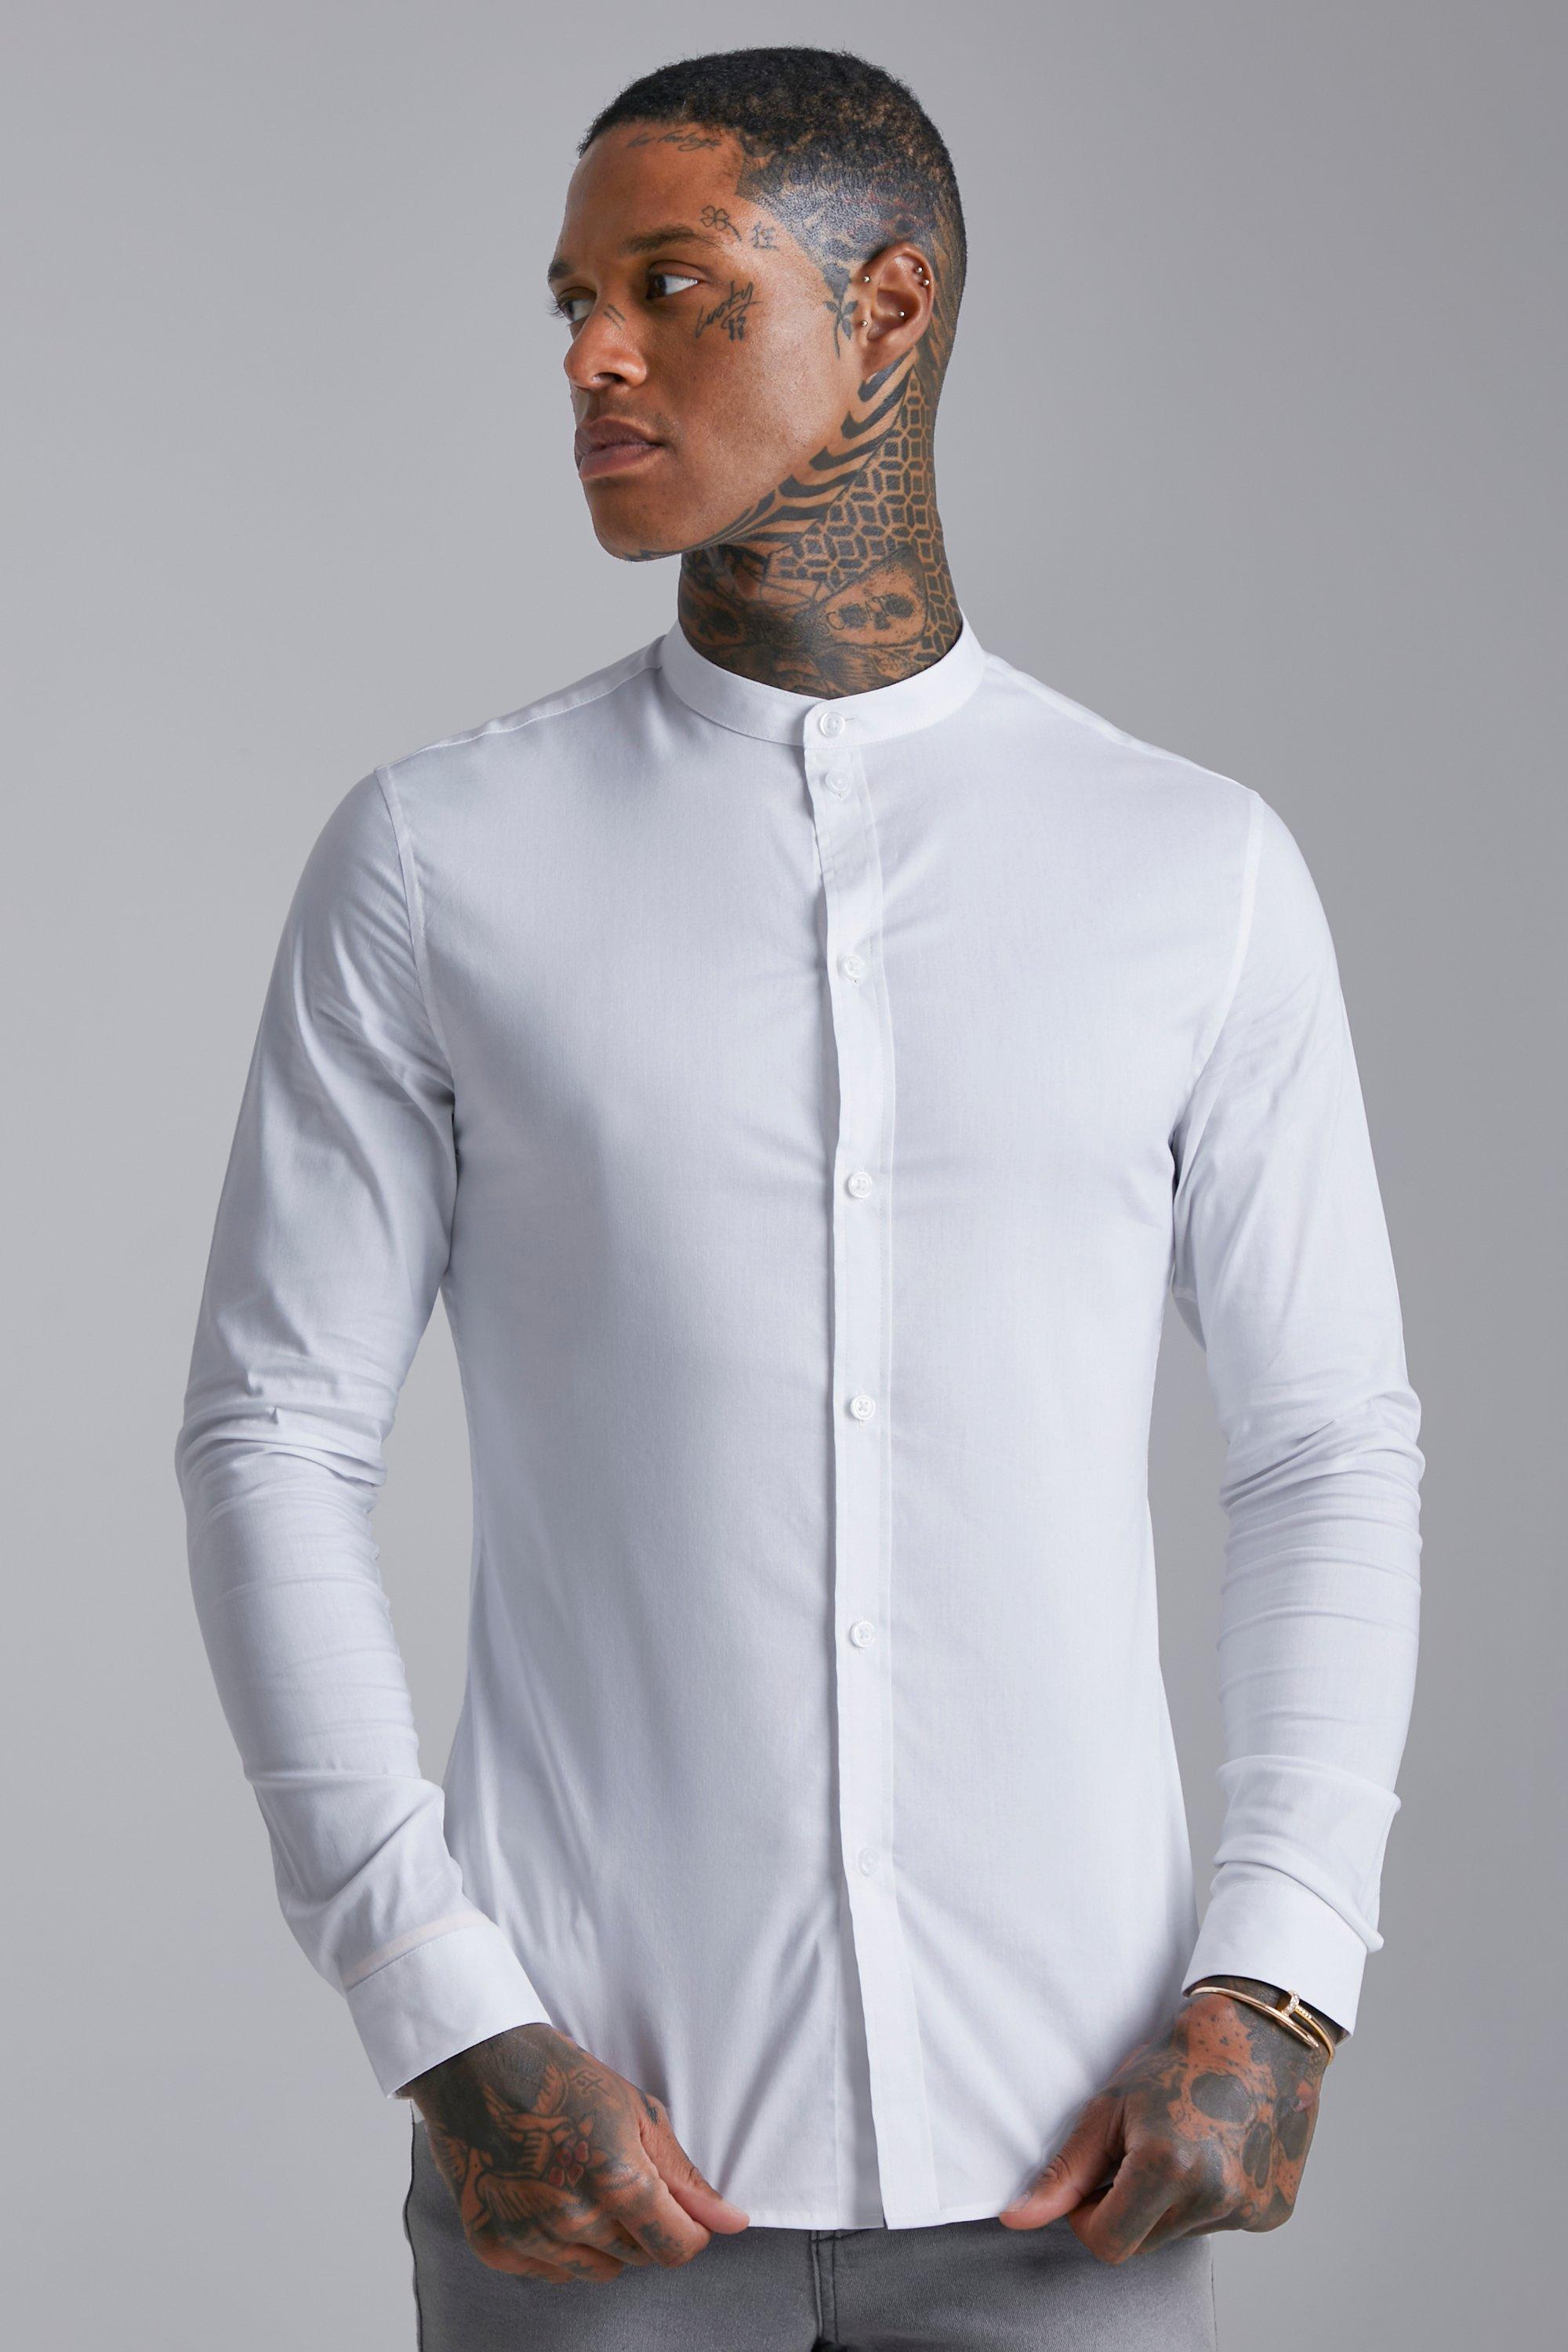 White Shirts for Men